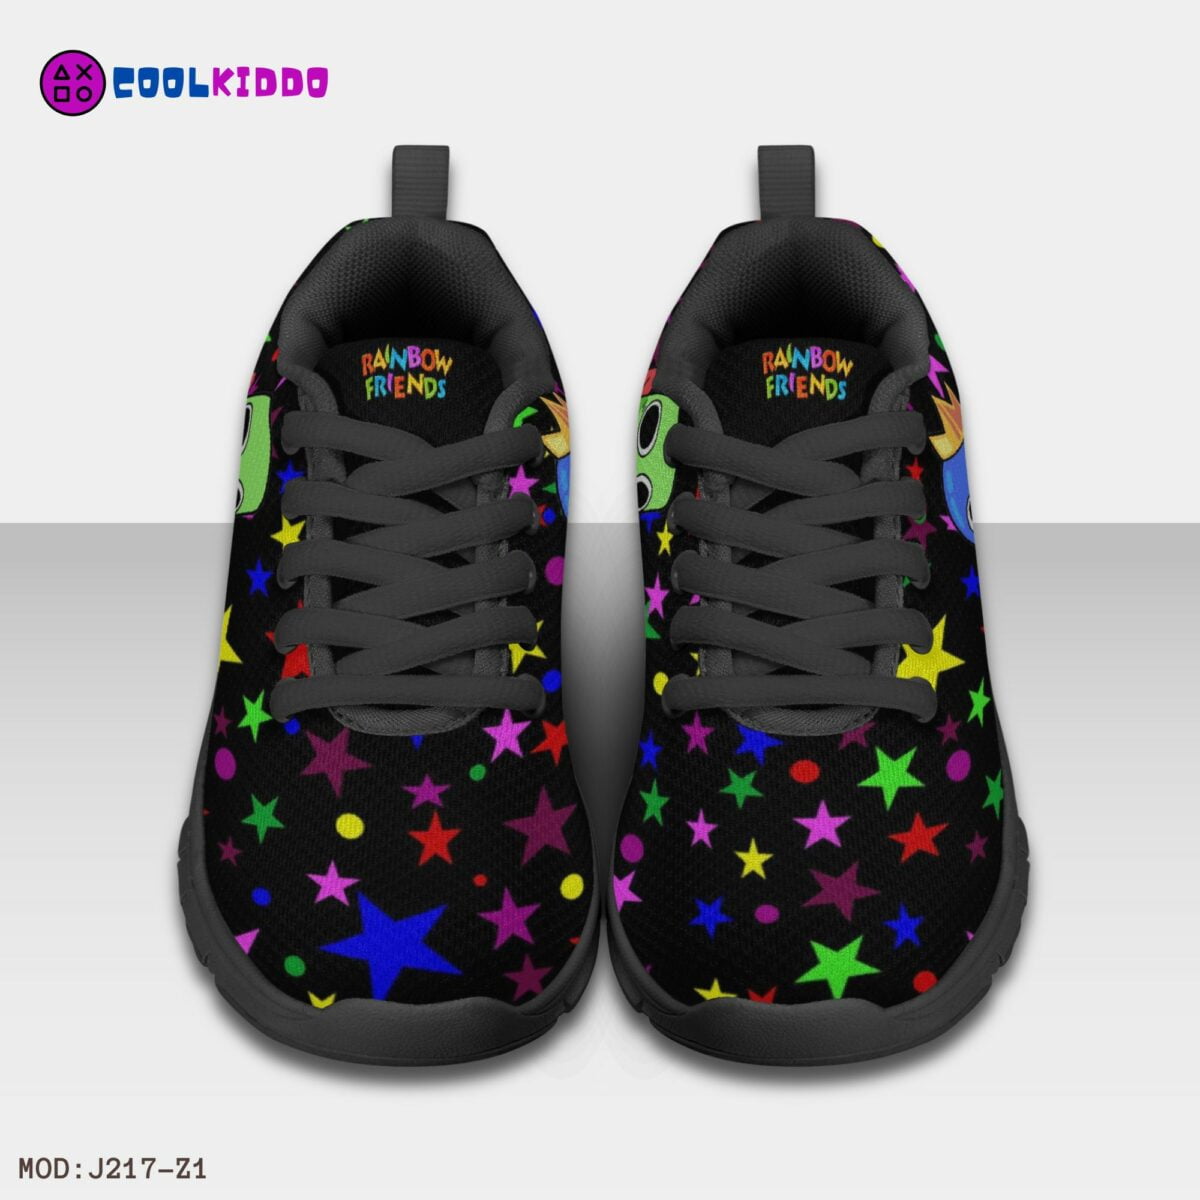 Rainbow Friends Inspired Kids’ Lightweight Mesh Sneakers Cool Kiddo 20